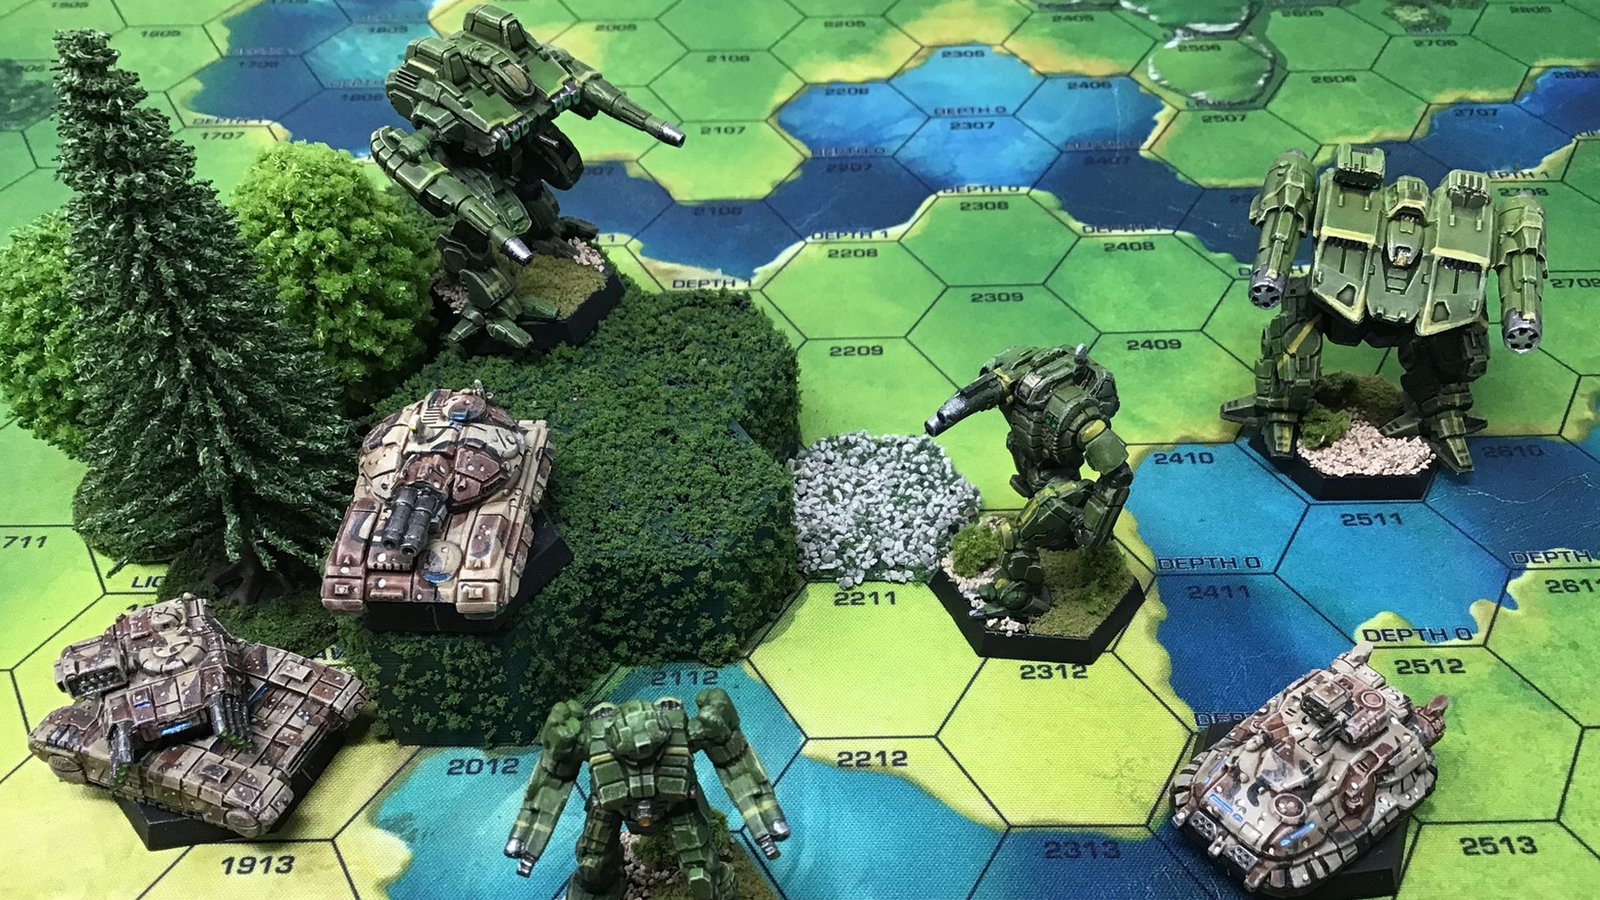 Battletech / Giochi da tavolo Wargames - Sistema modulare scala mappa